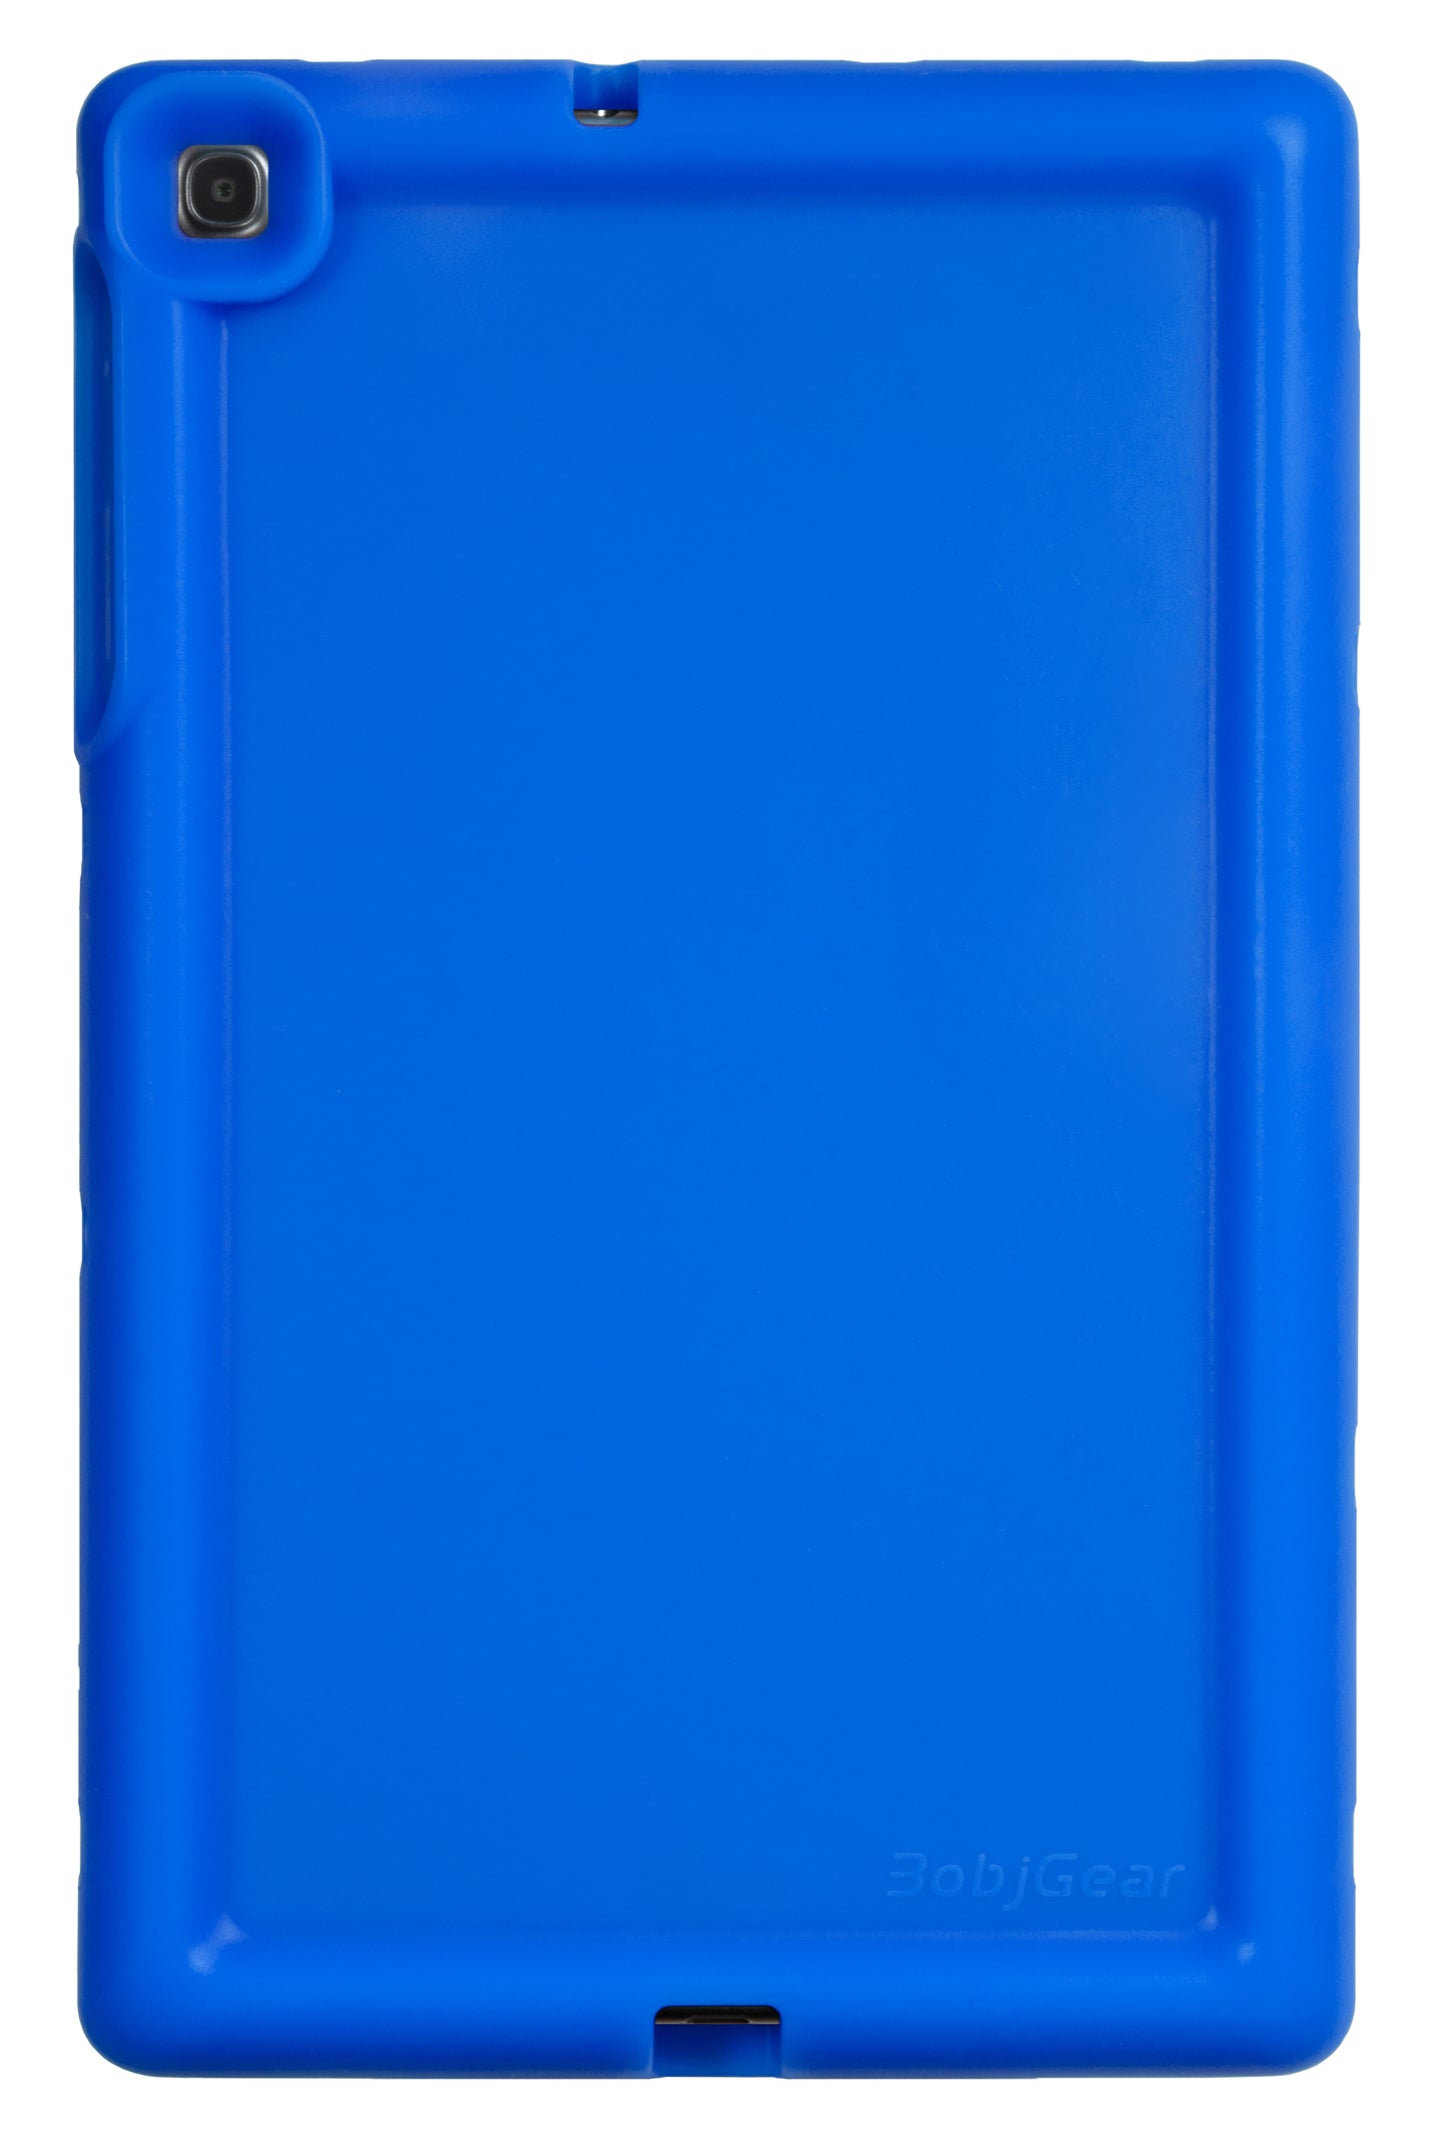 Bobj Rugged Tablet Case for Samsung Galaxy Tab A 10.1 (2019) SM-T510 SM-T515 SM-T517 - Batfish Blue